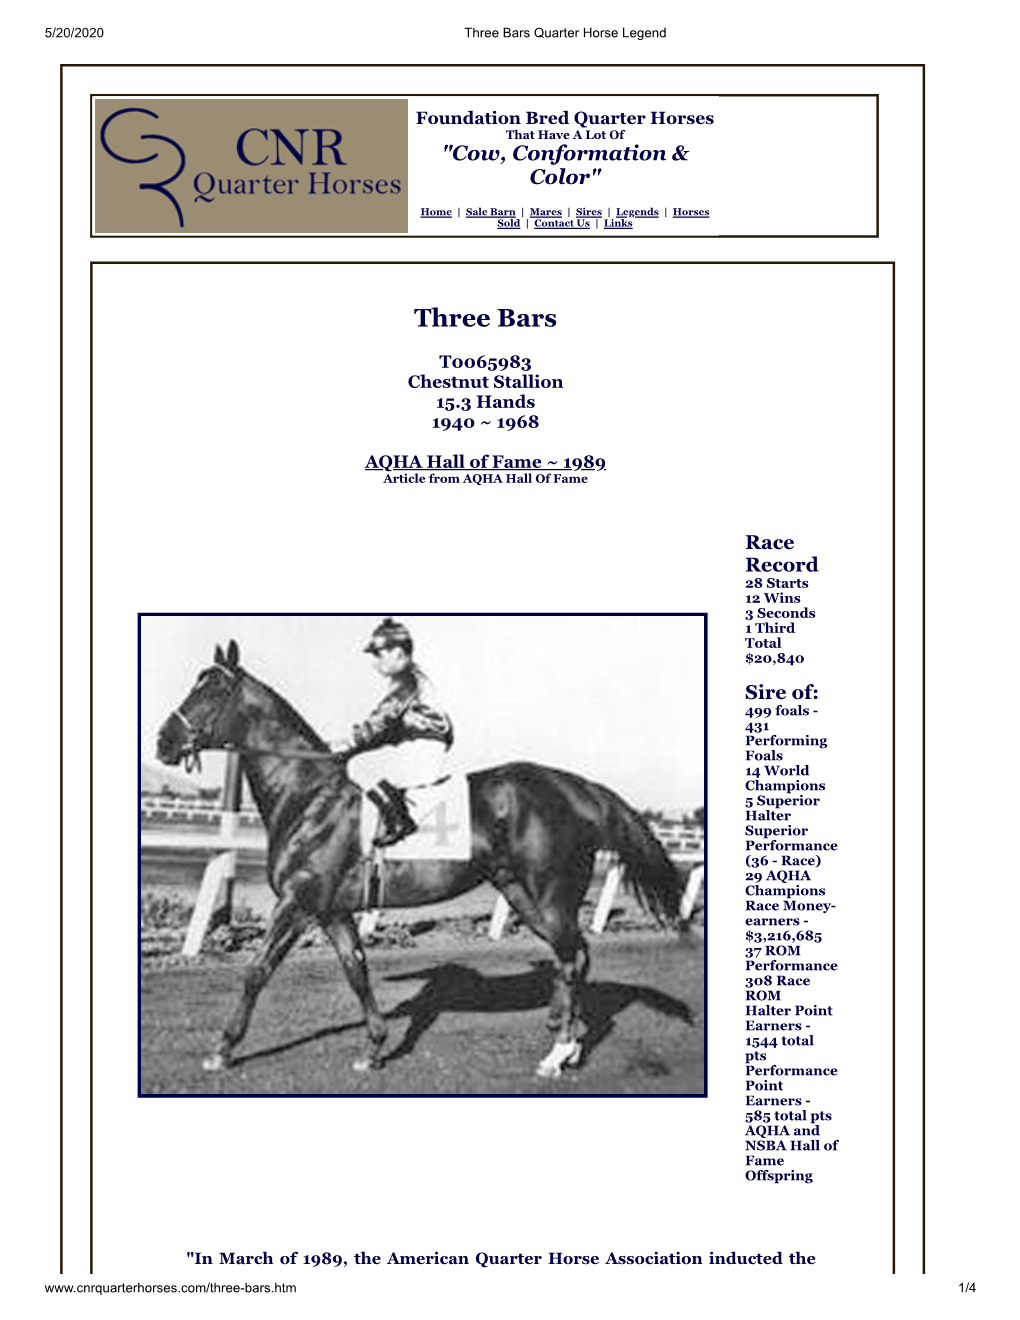 Three Bars Quarter Horse Legend